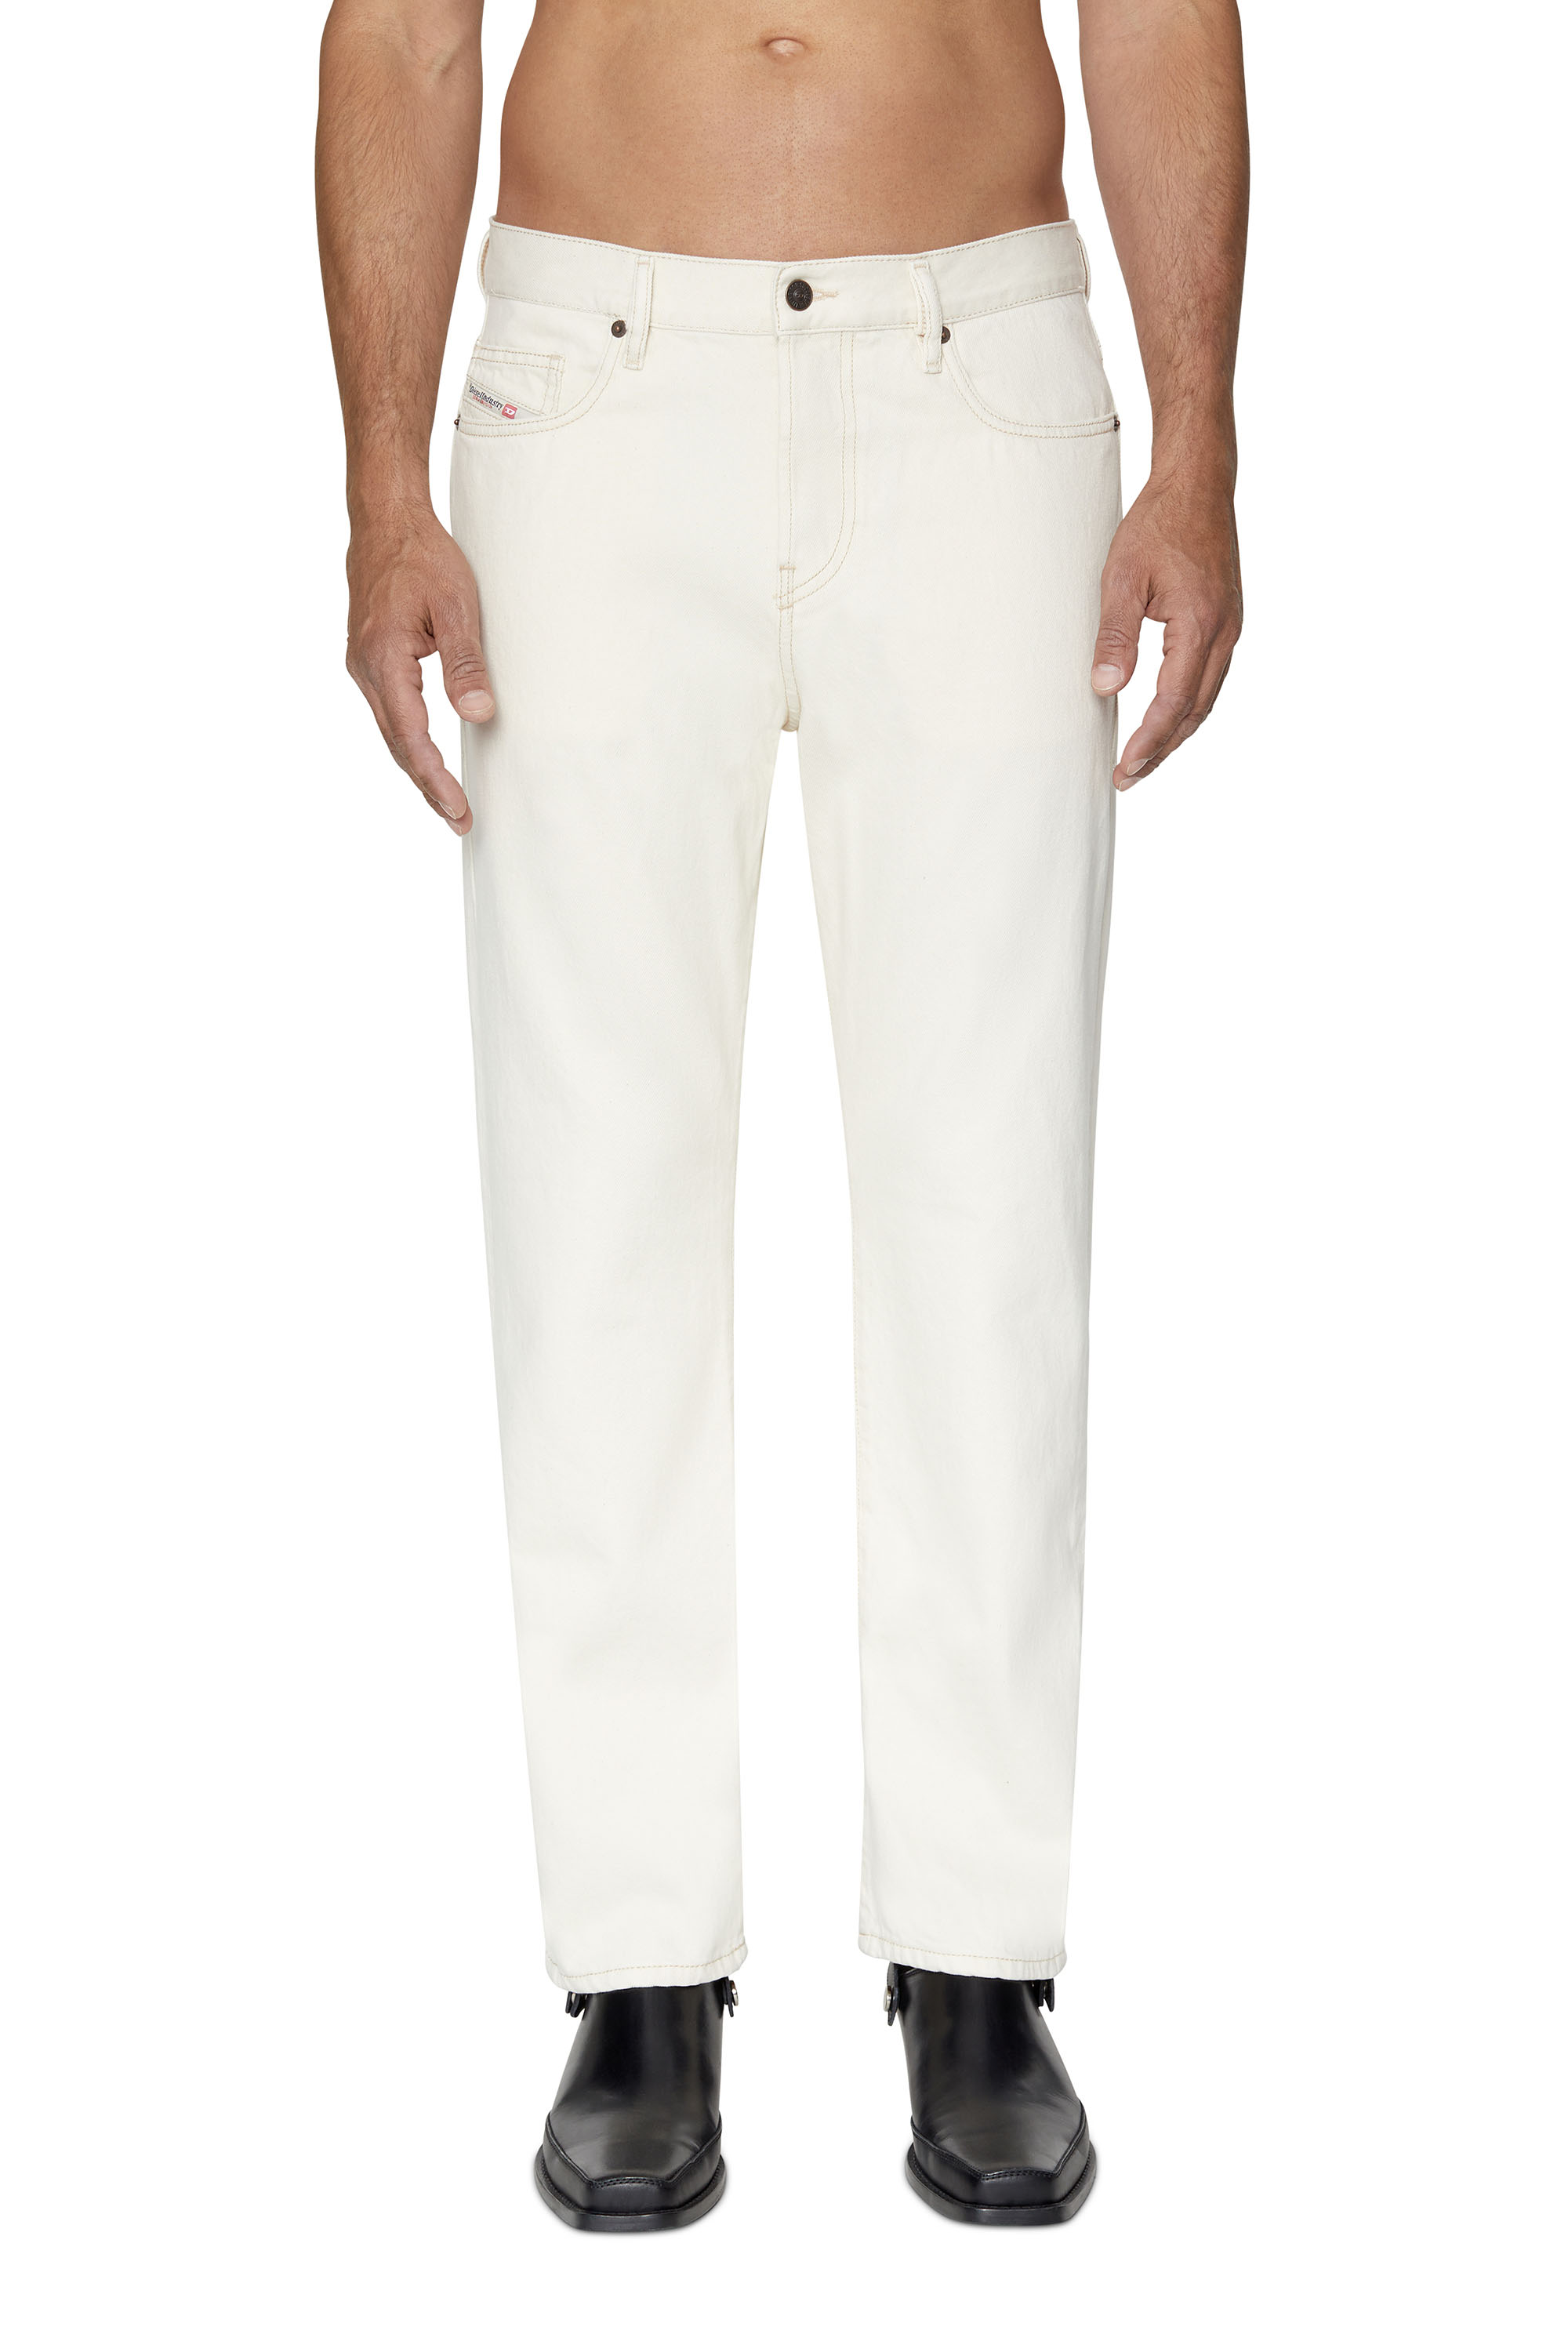 2020 D-VIKER 09B95 Straight Jeans, White - Jeans